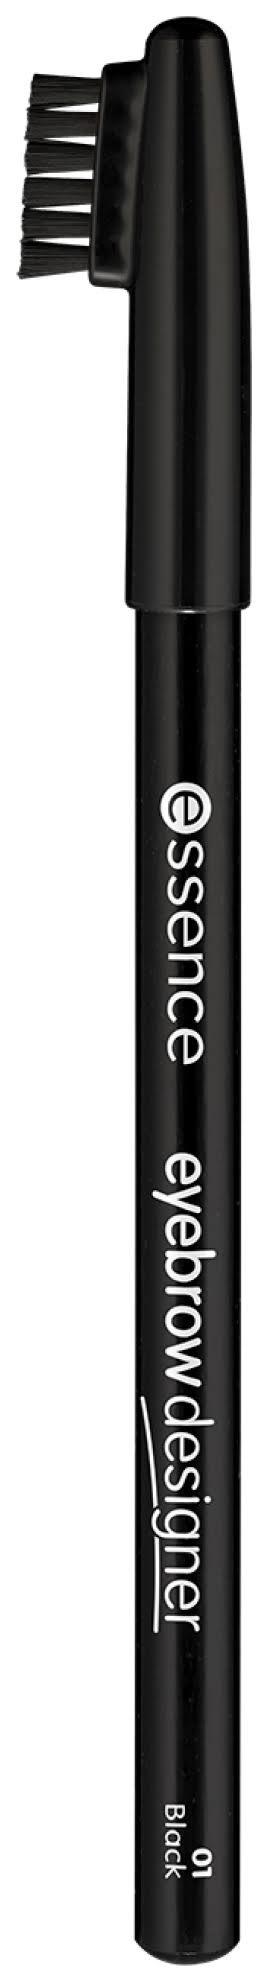 Essence Eyebrow Designer - 01 Black